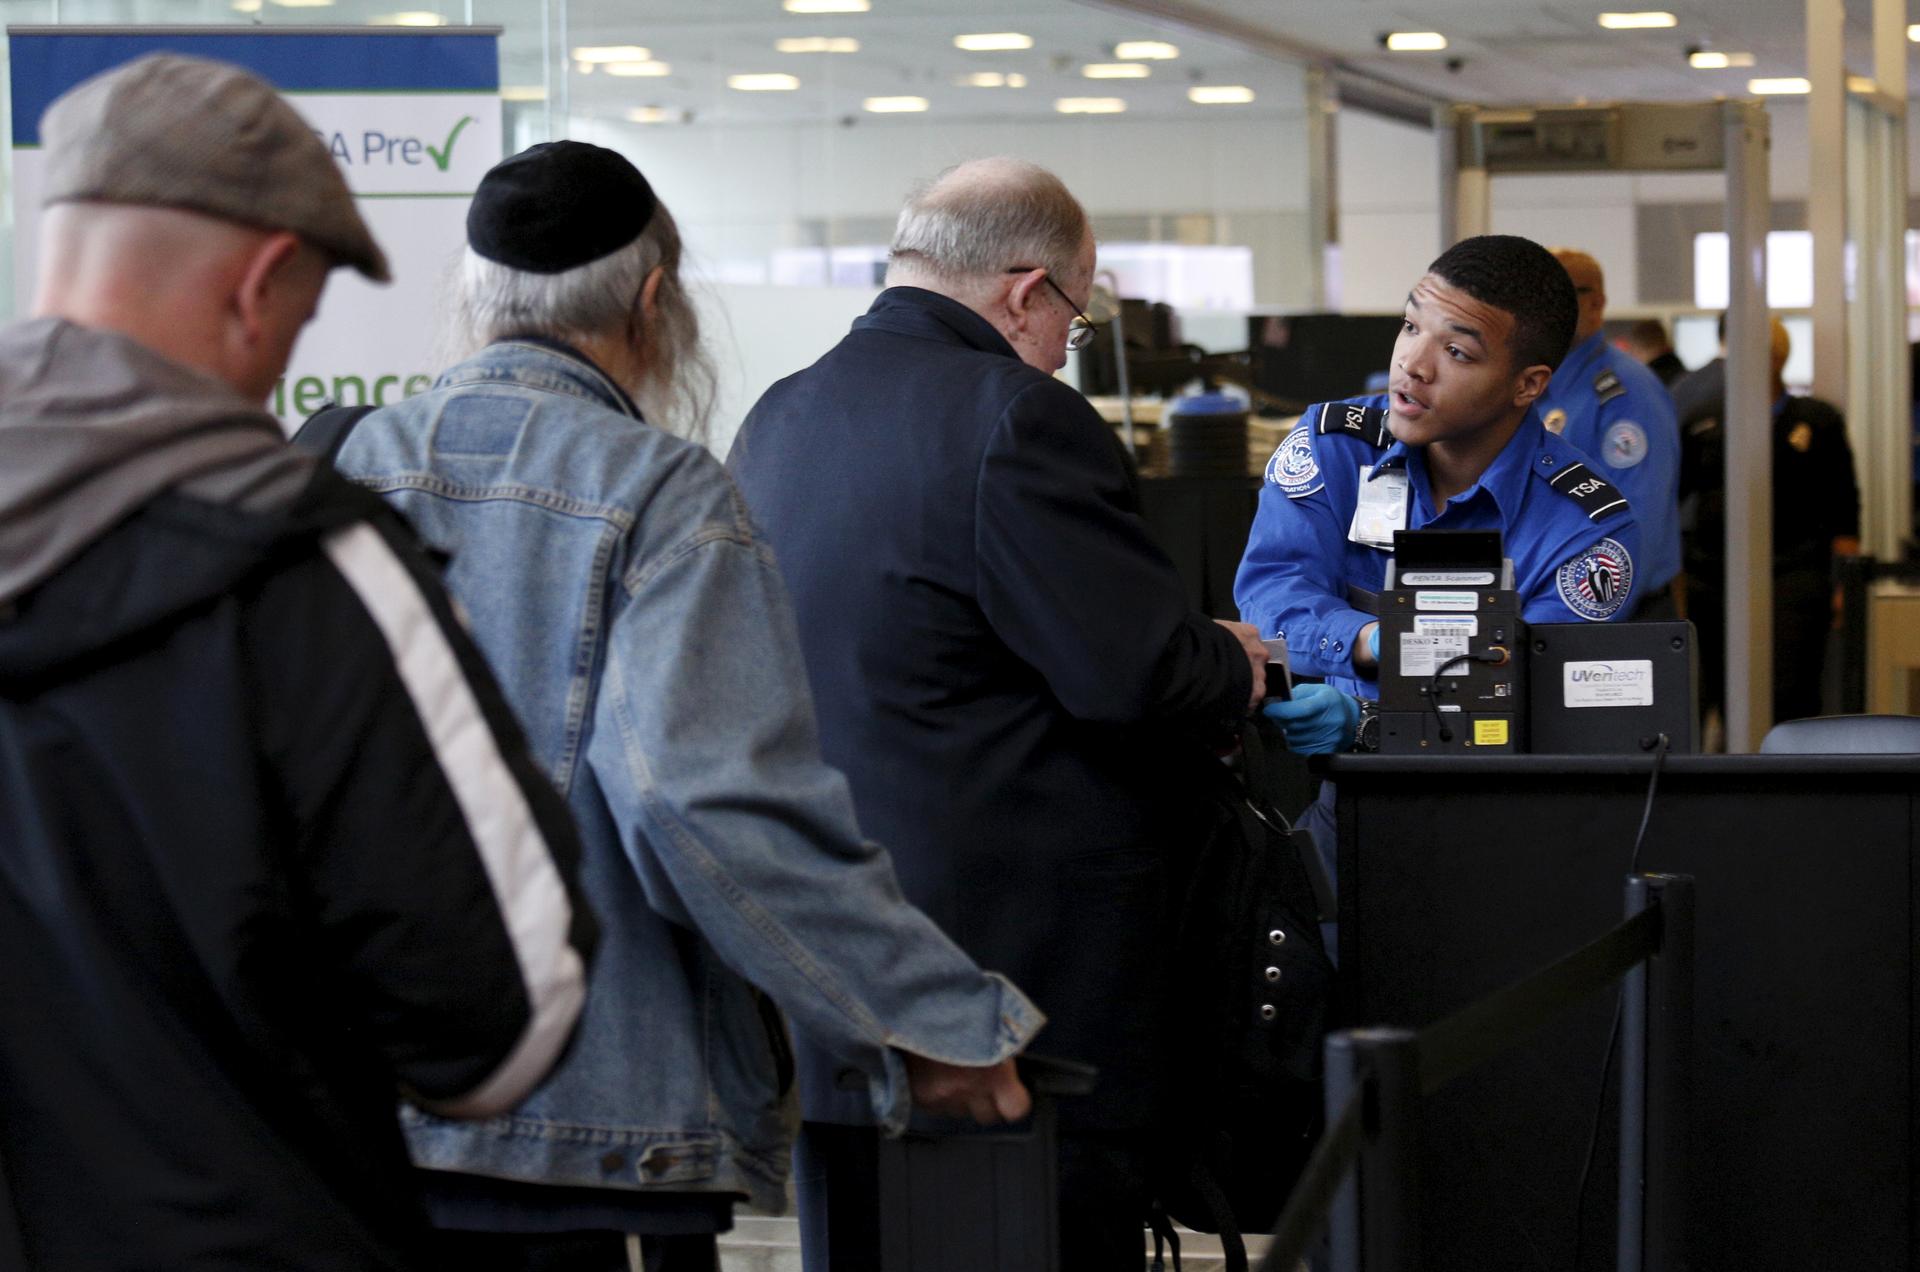 Travelers make their way through a TSA checkpoint at Reagan National Airport in Washington